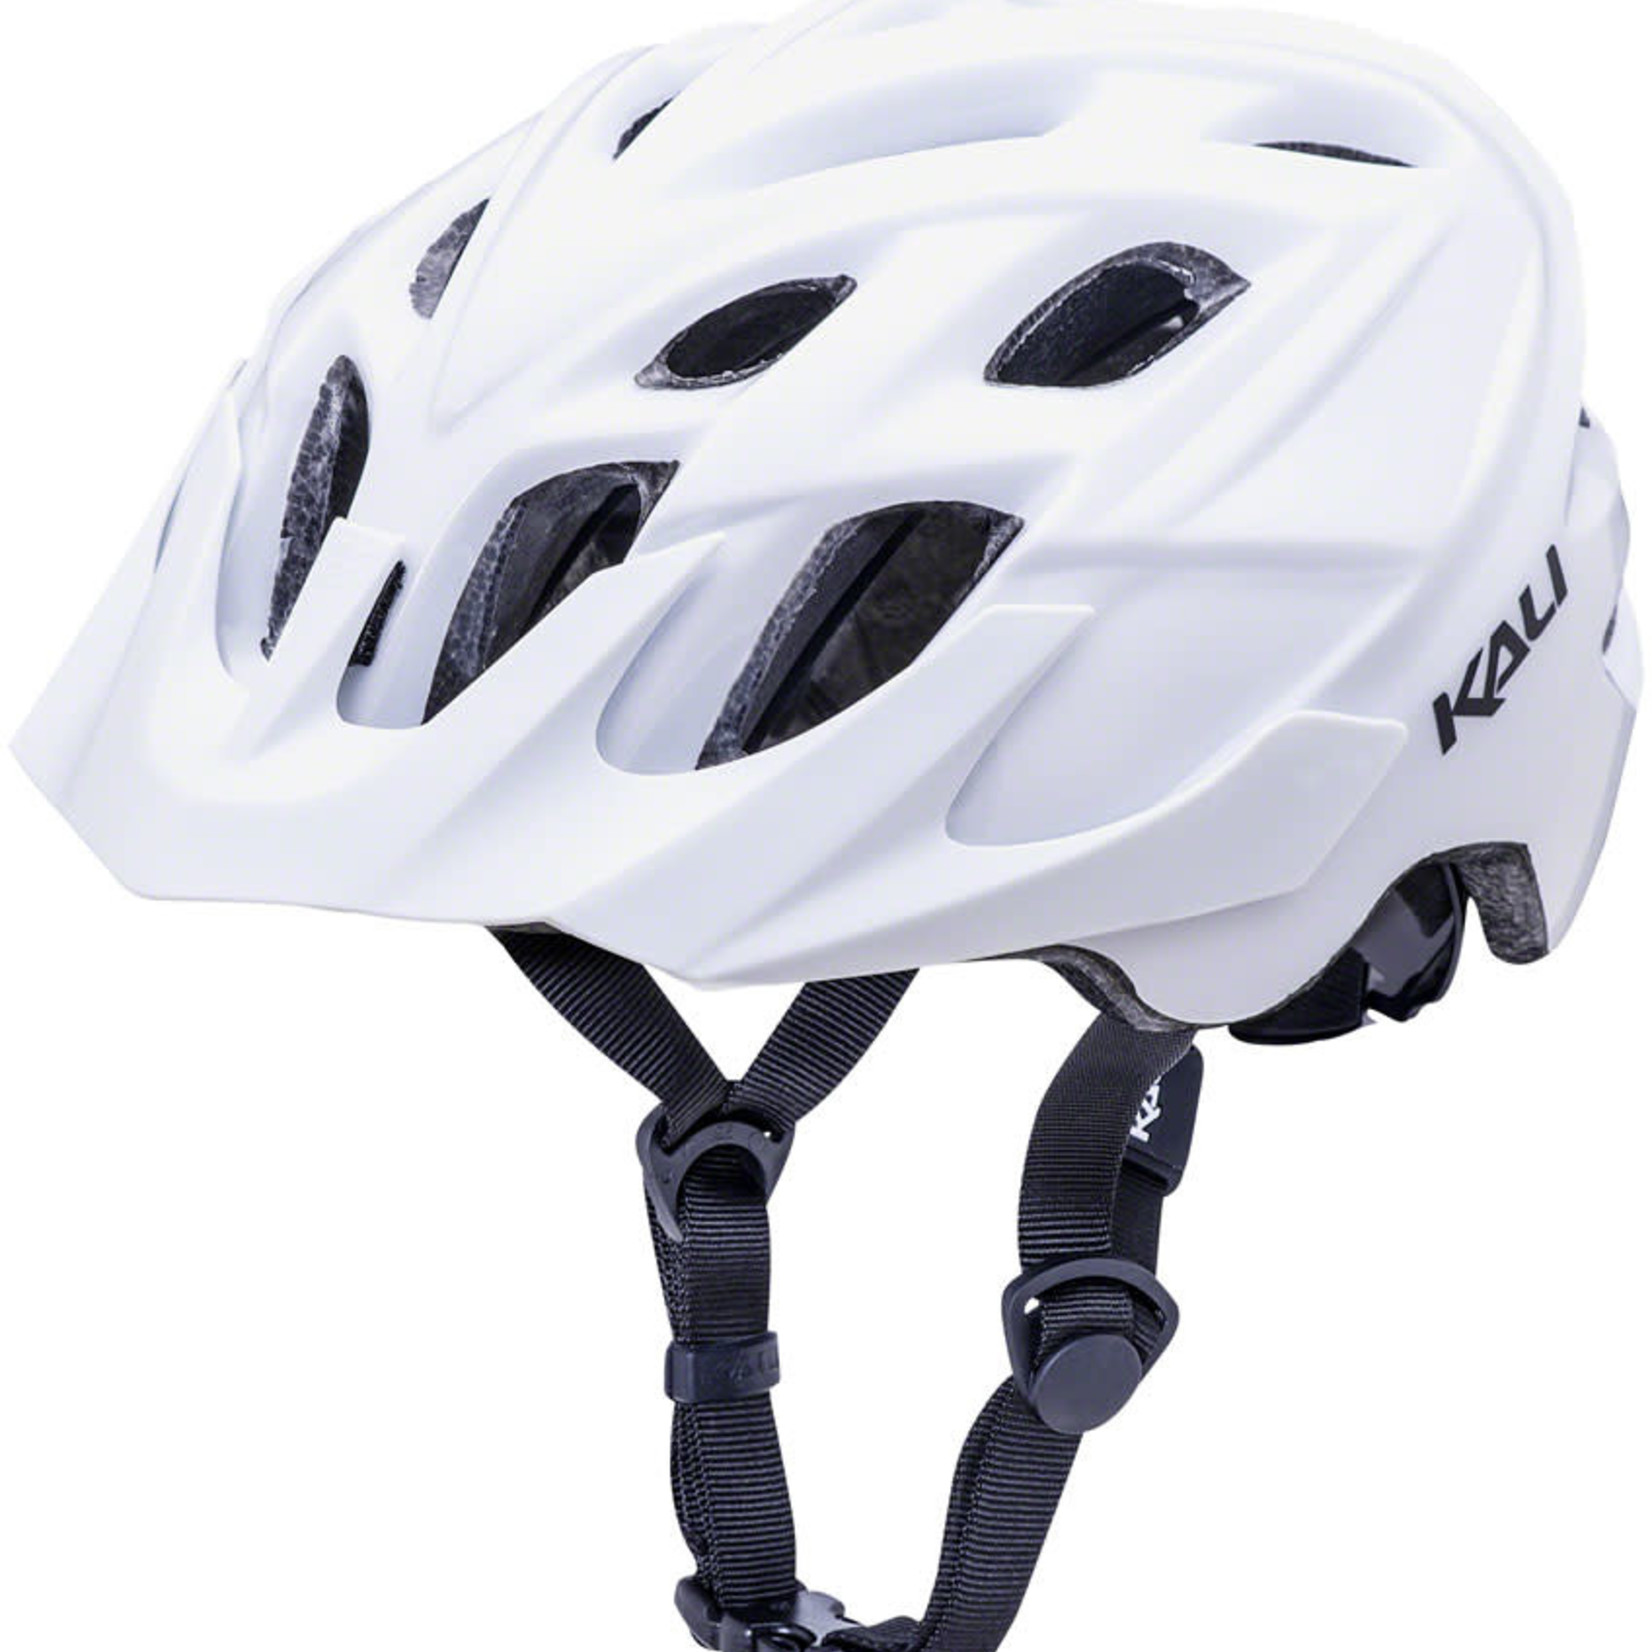 KALI Kali Protectives Chakra Solo Helmet - Solid White Small/Medium